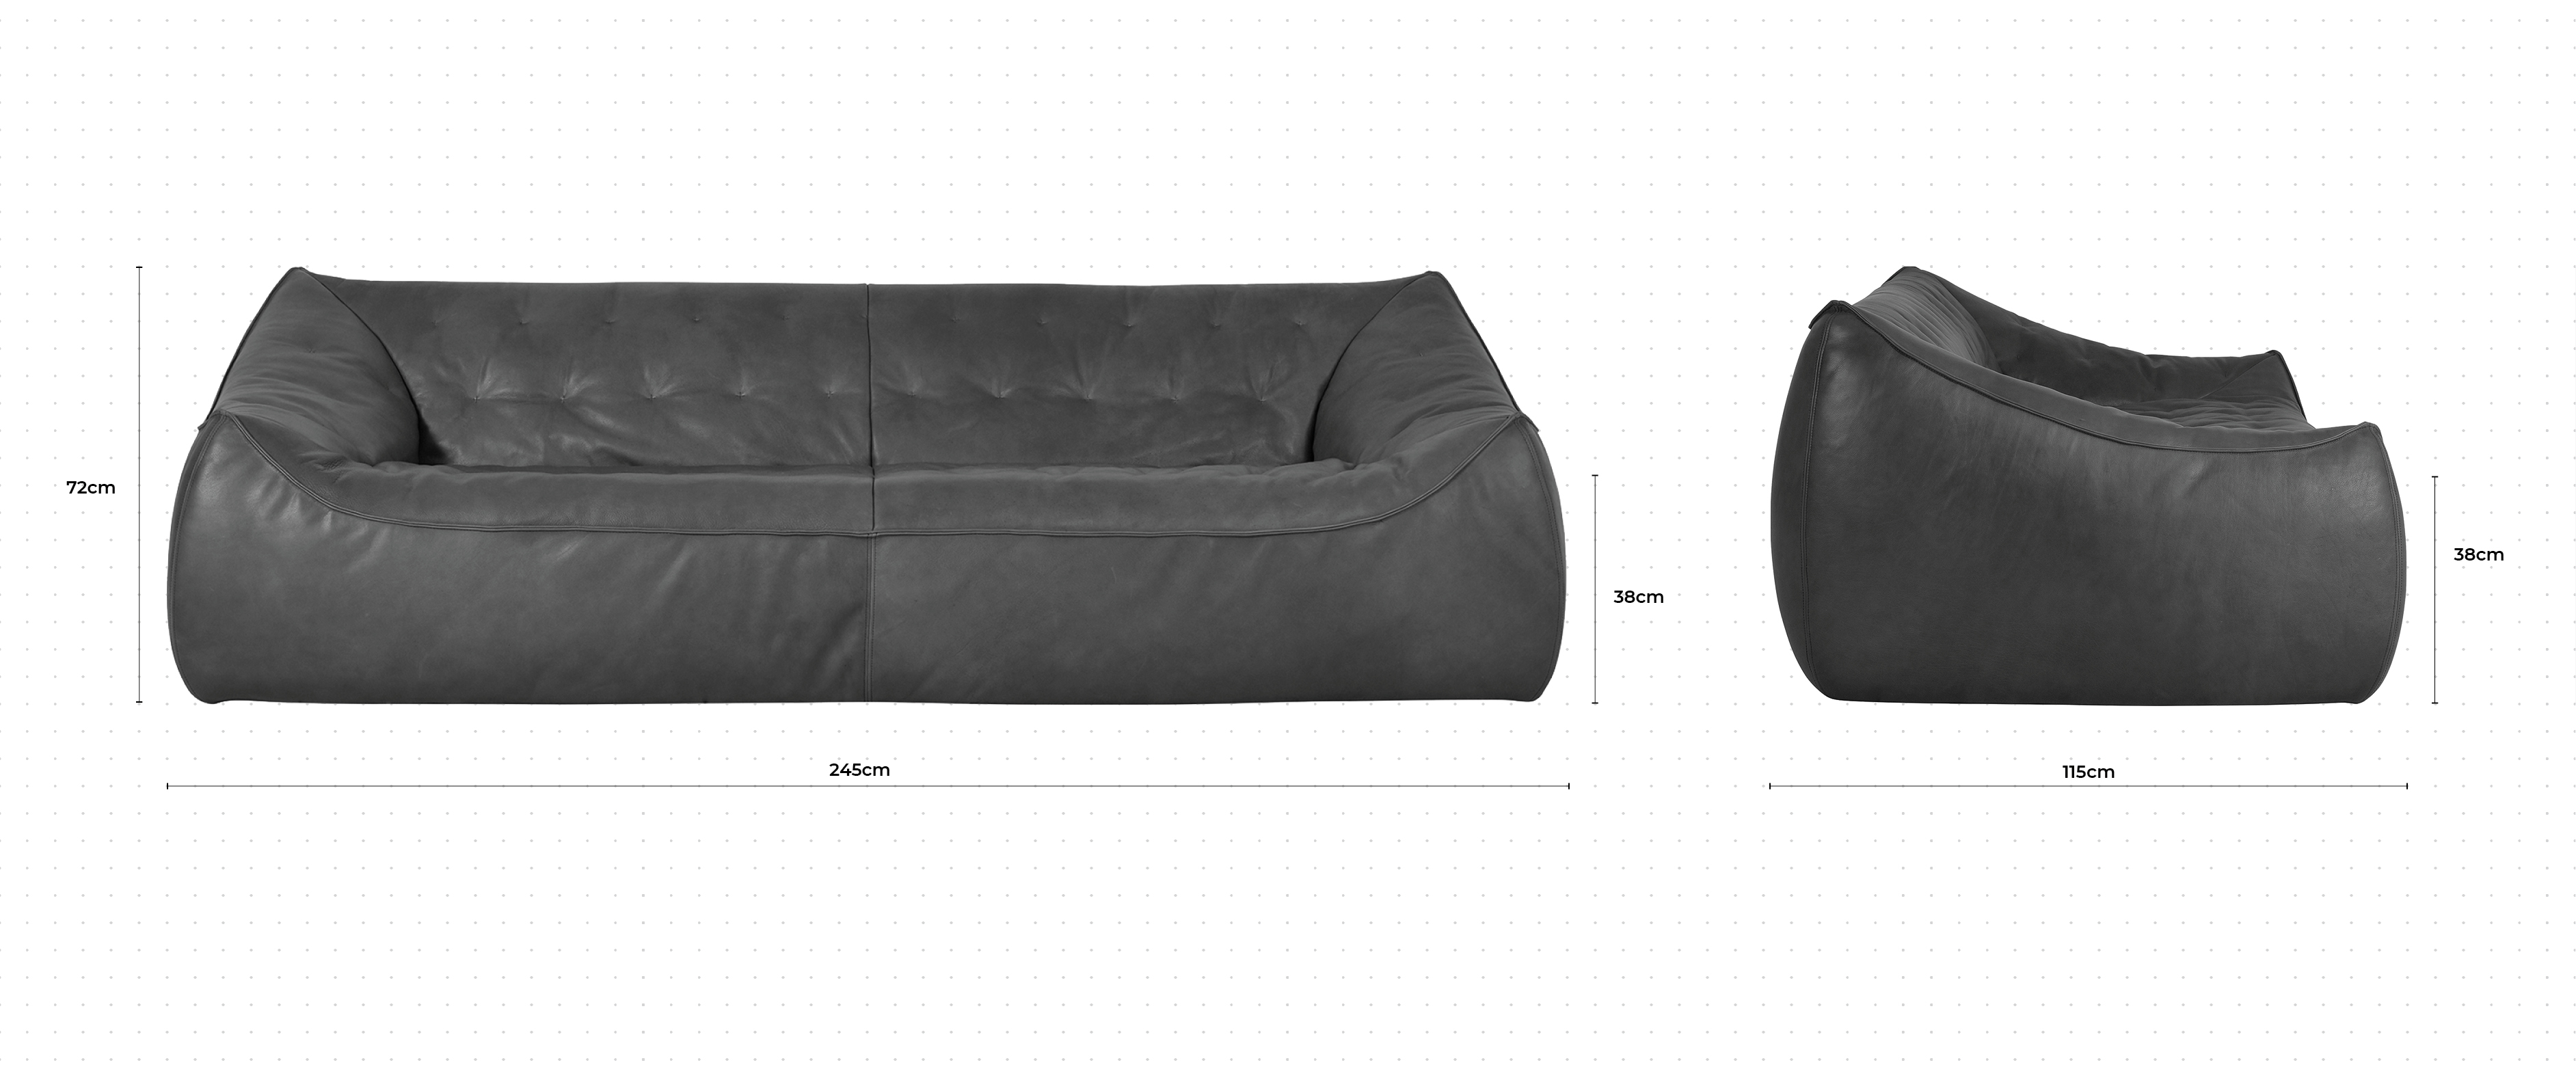 Torte 3 Seater Sofa dimensions